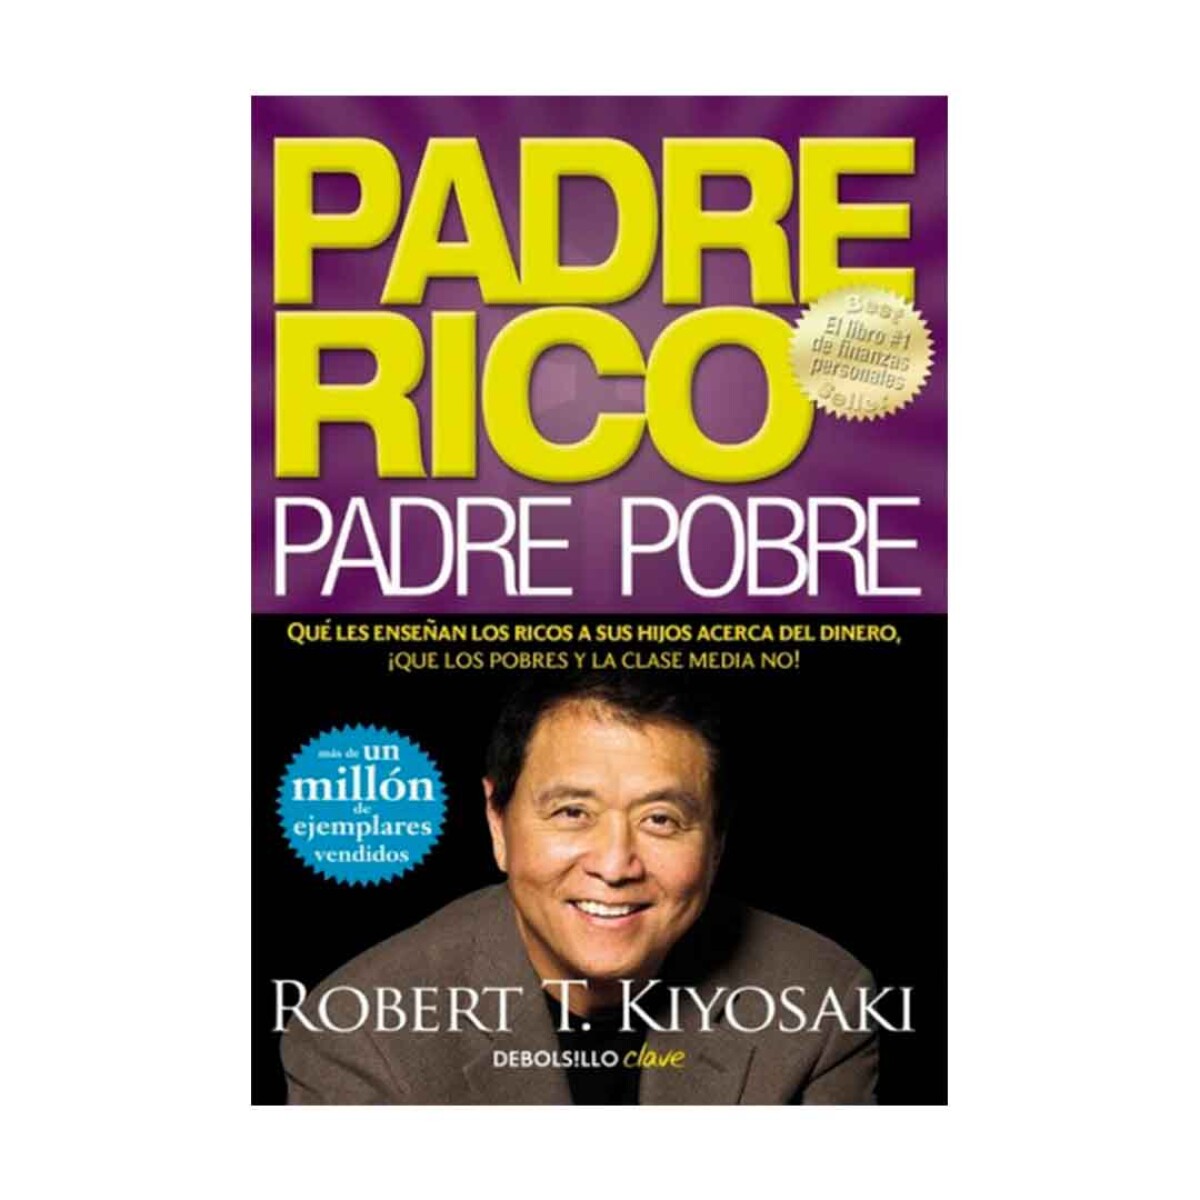 Libro Padre rico padre pobre Robert Kiyosaki Bestseller - 001 